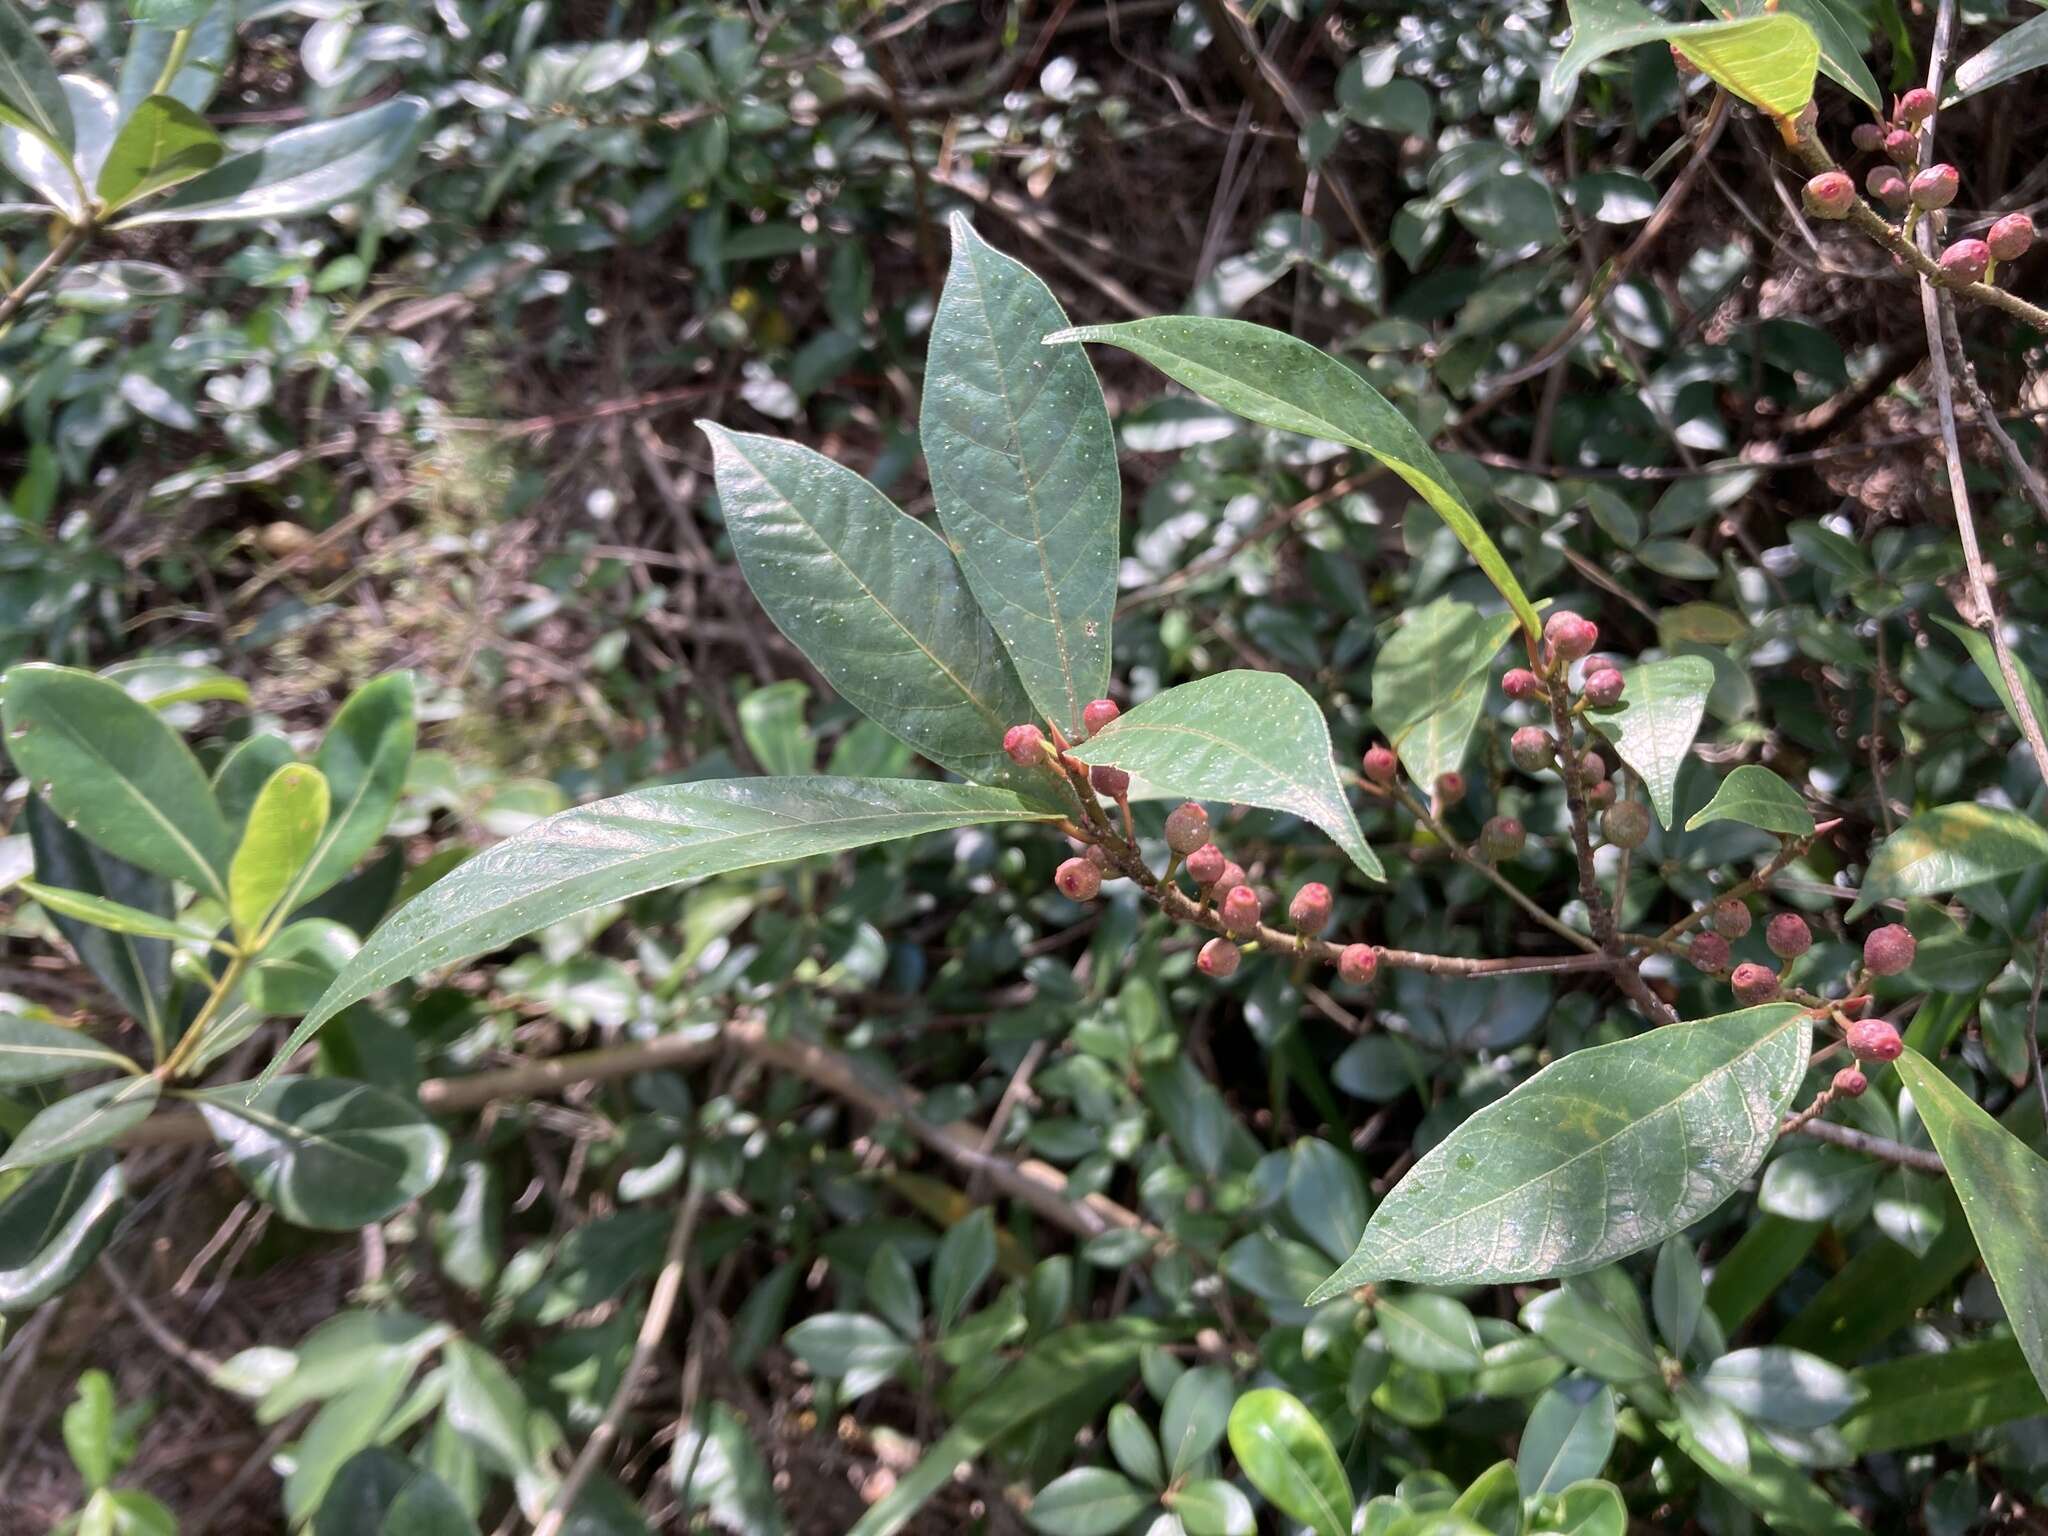 Image of Ficus pandurata Hance